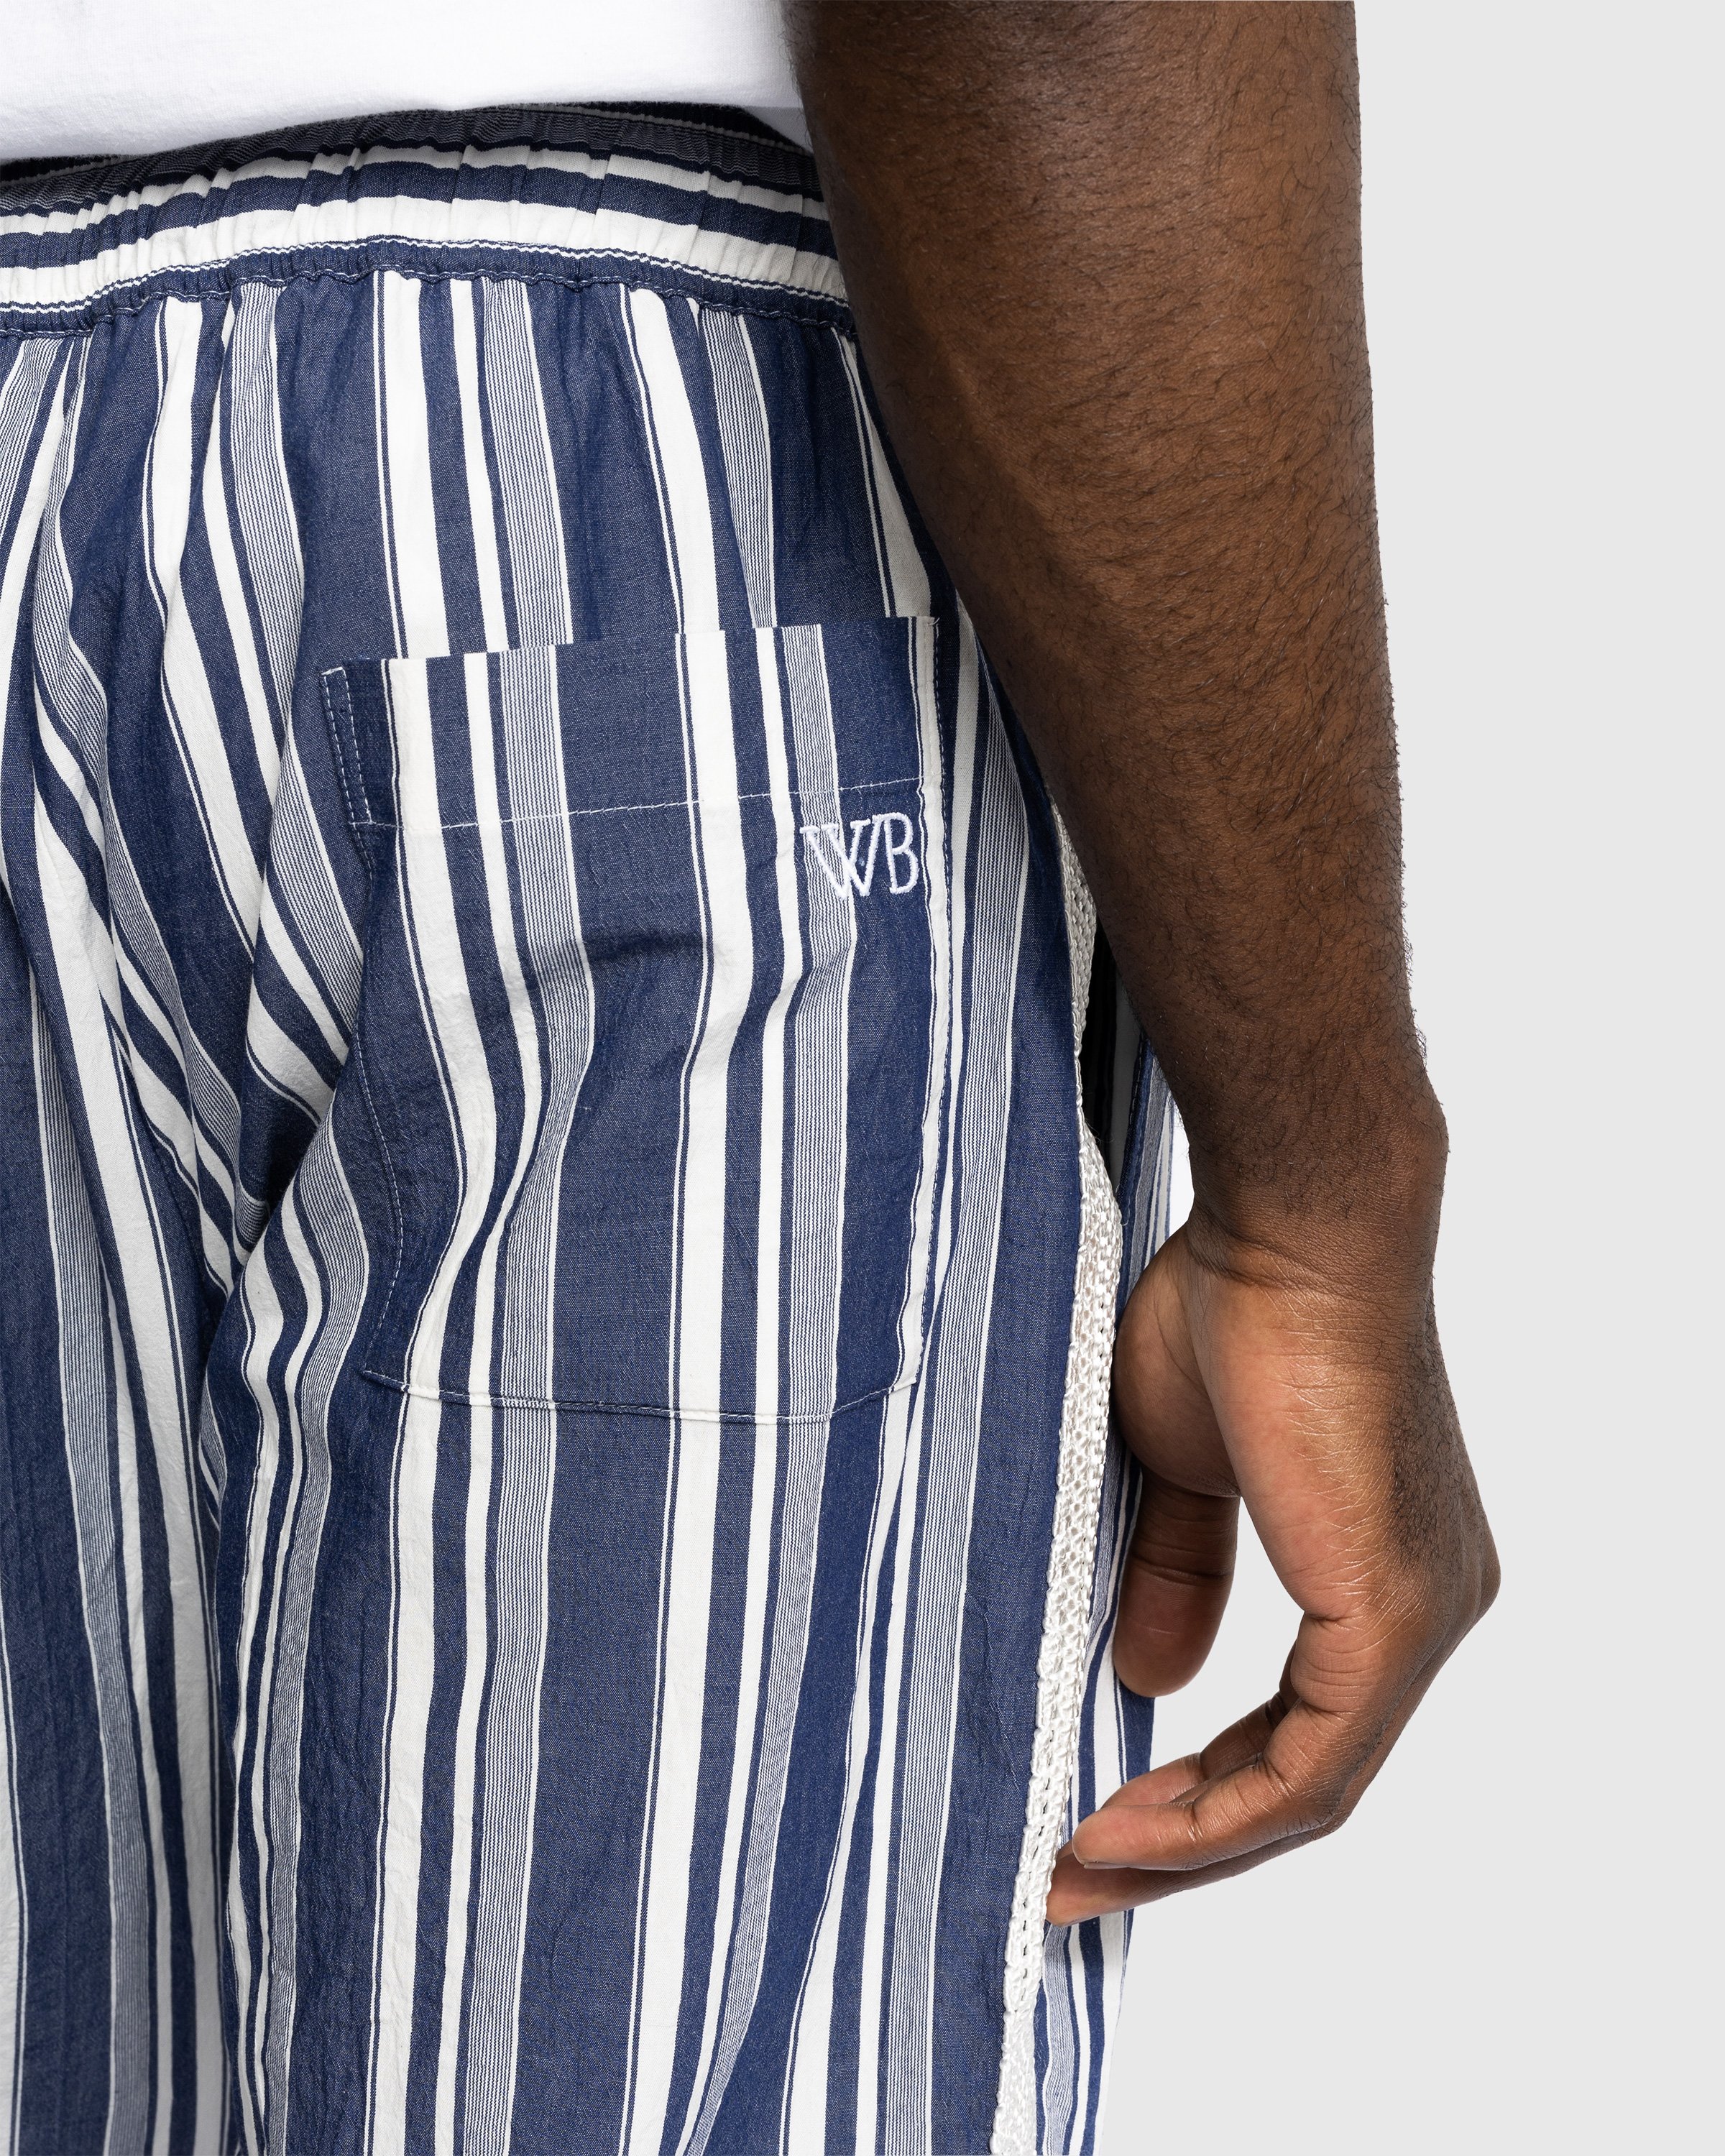 Wales Bonner - Soul Pyjama Trousers - Clothing - Blue - Image 5